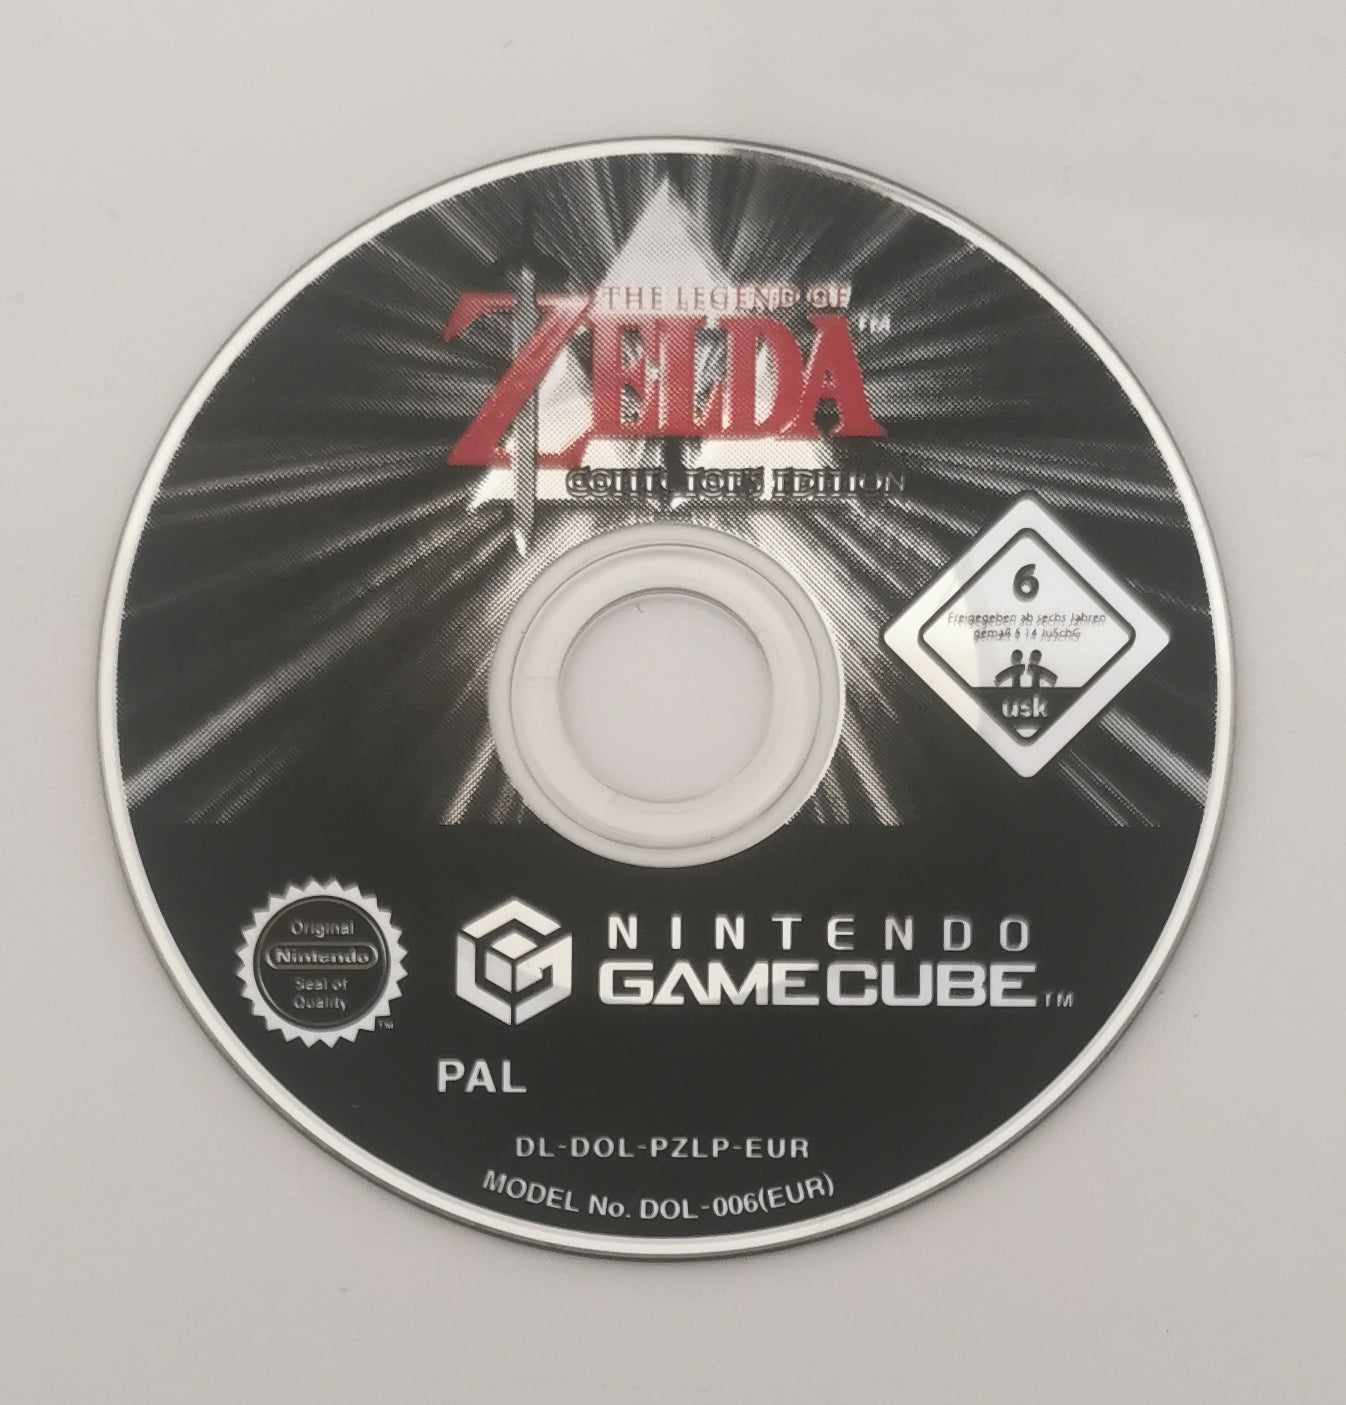 The Legend of Zelda Collectors Edition (Gamecube) [Akzeptabel]